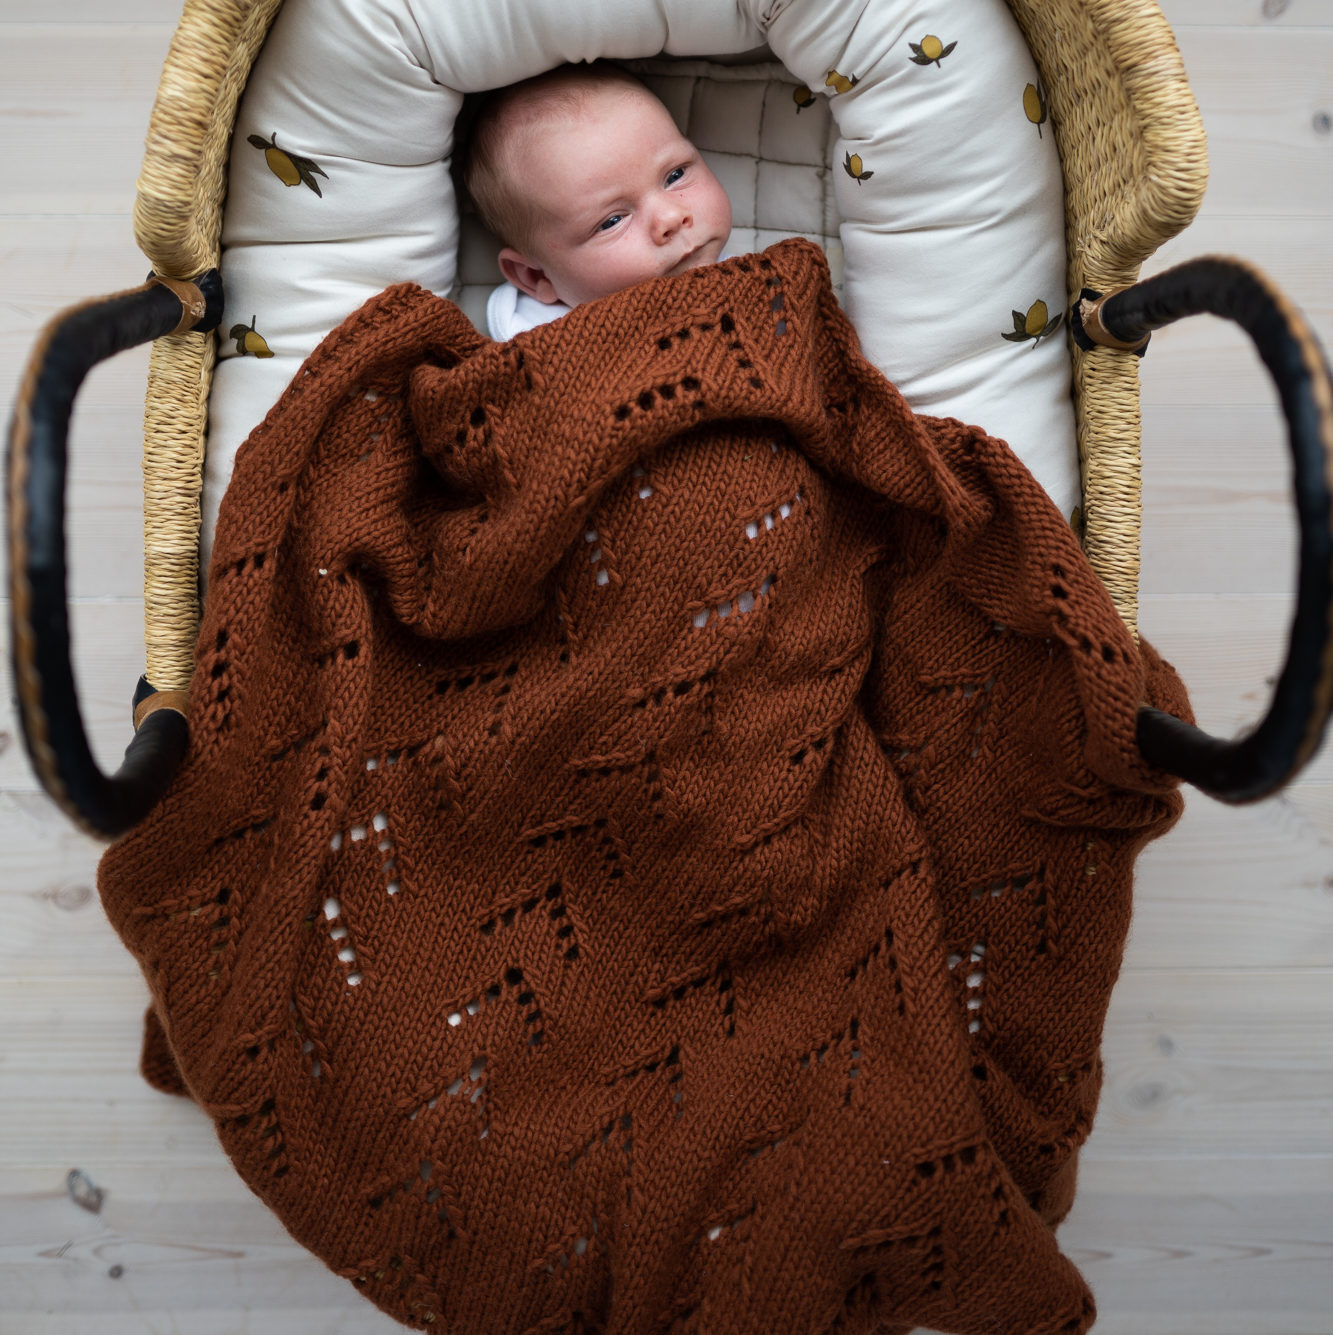  - Bloom blanket | Knitted baby blanket | Knitting pattern- by HipKnitShop - 24/11/2020